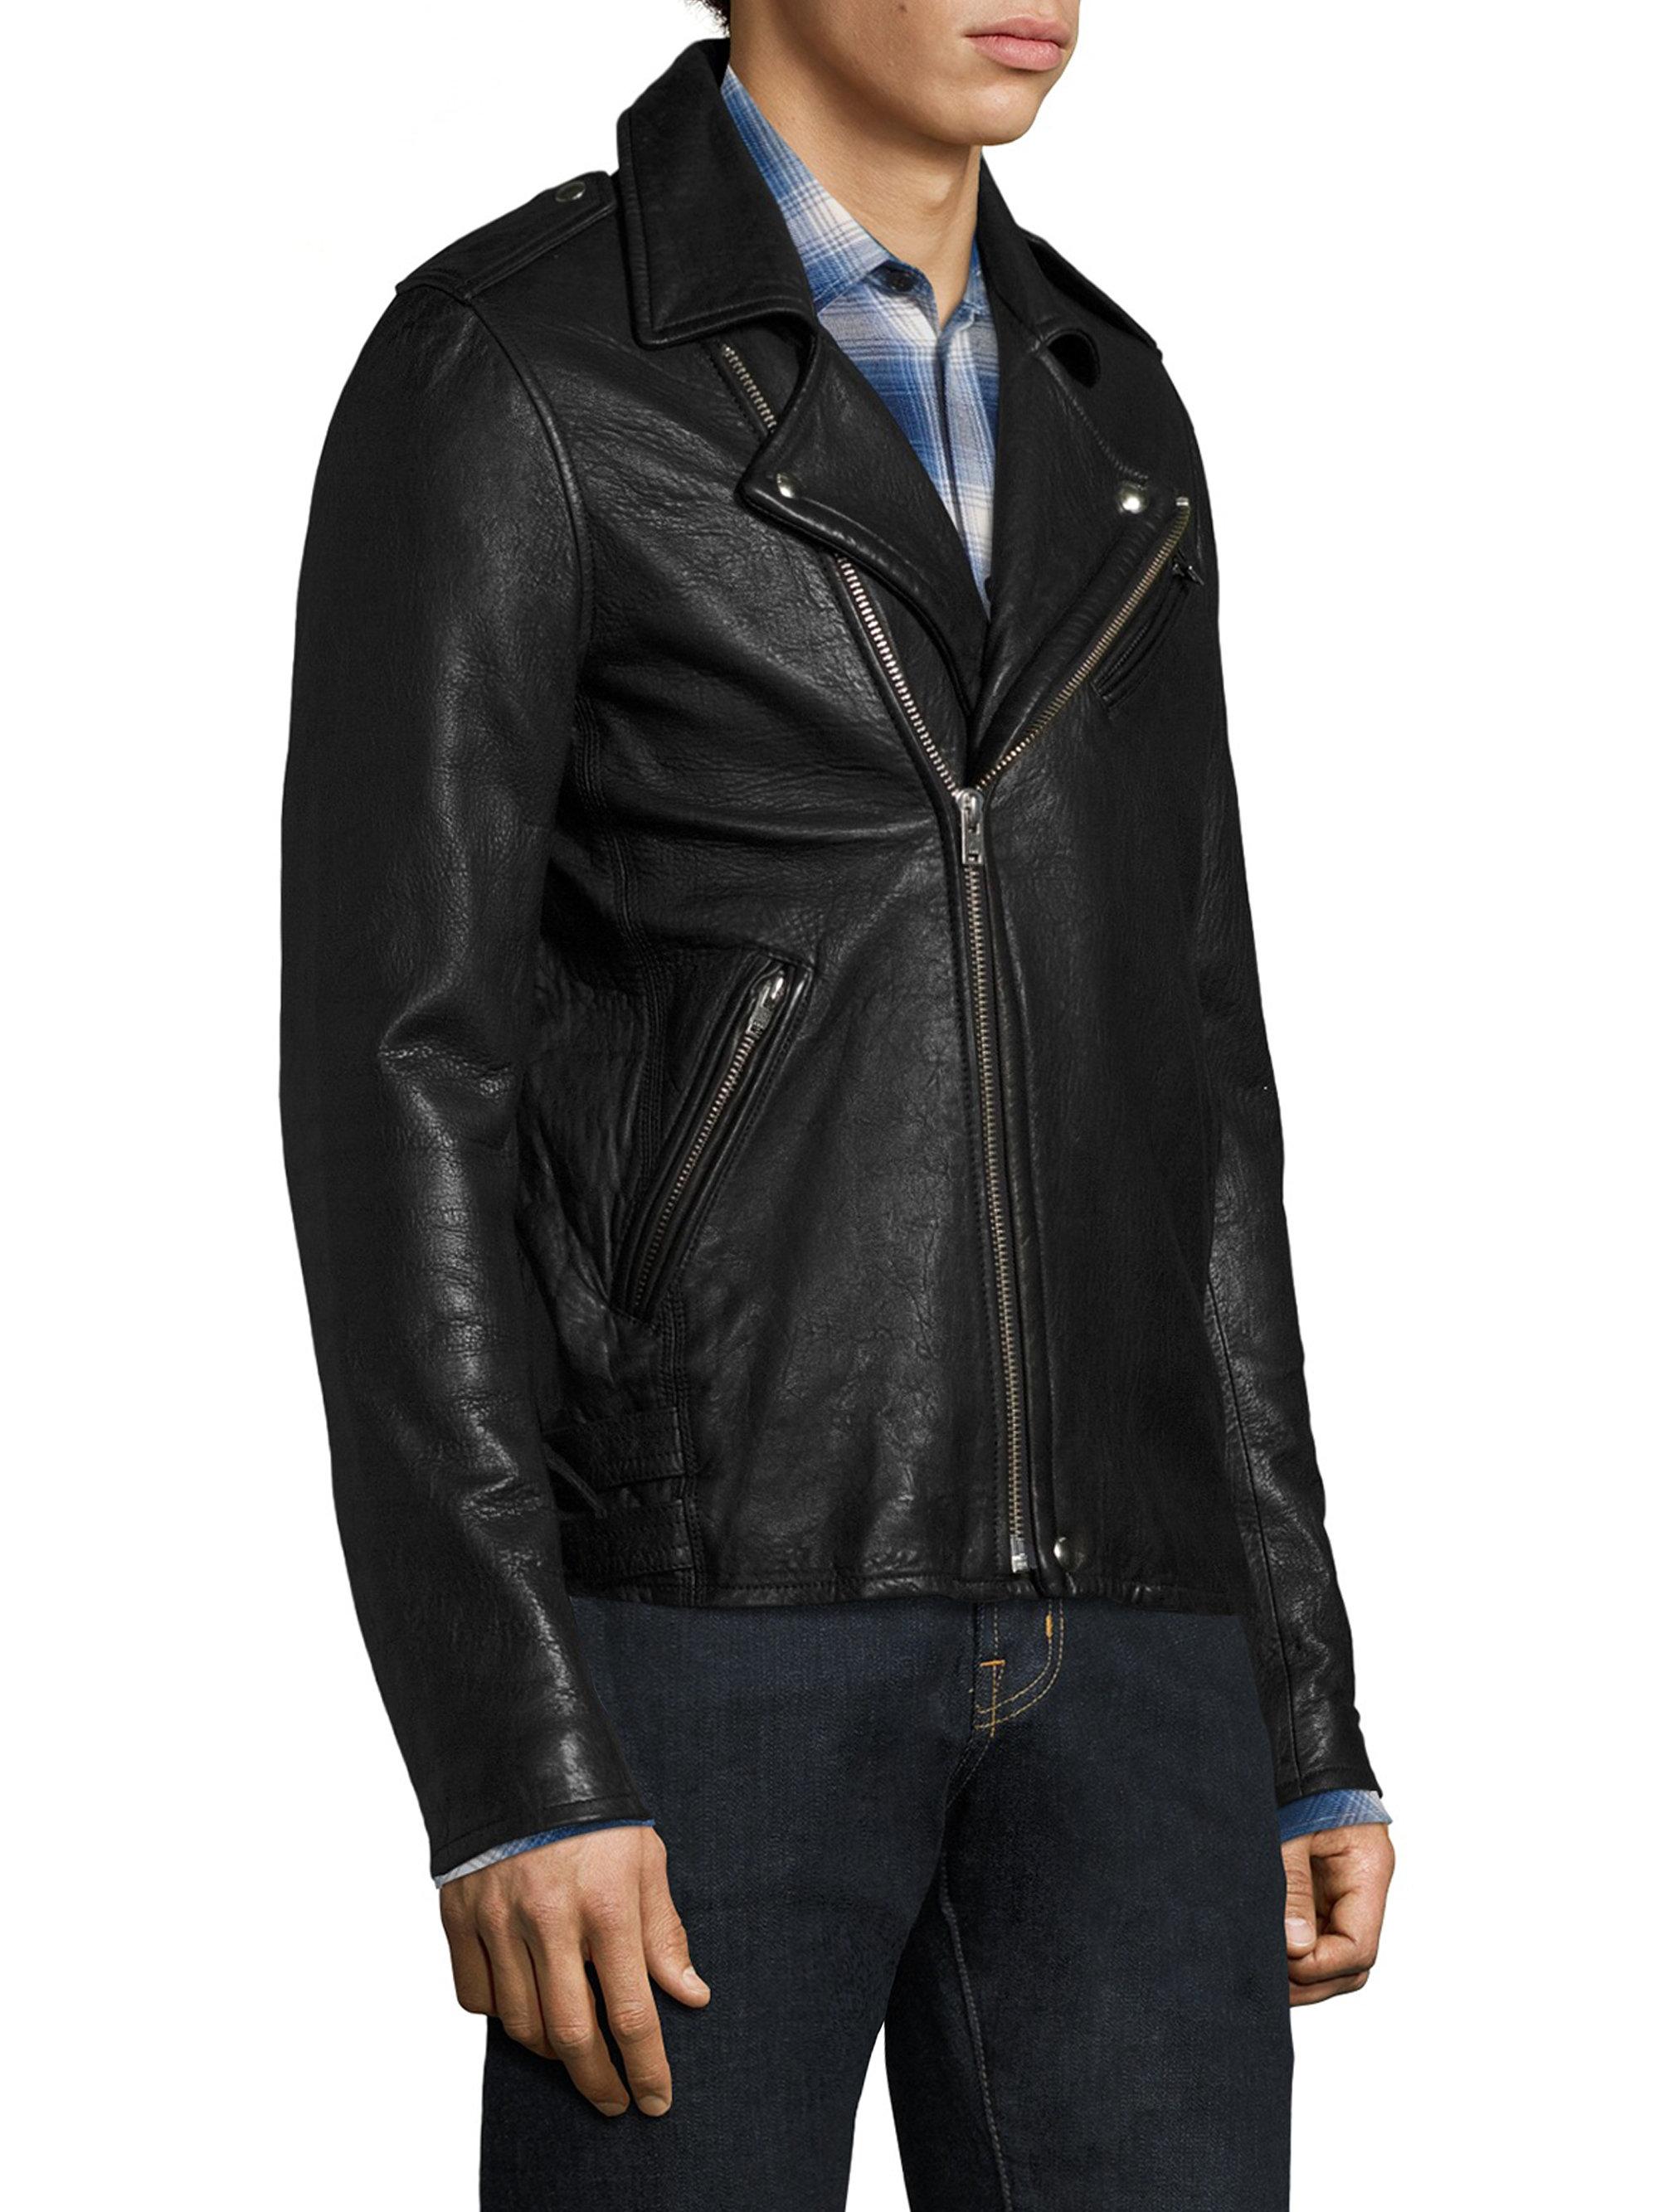 Lyst - IRO Zip Front Lambskin Leather Jacket in Black for Men